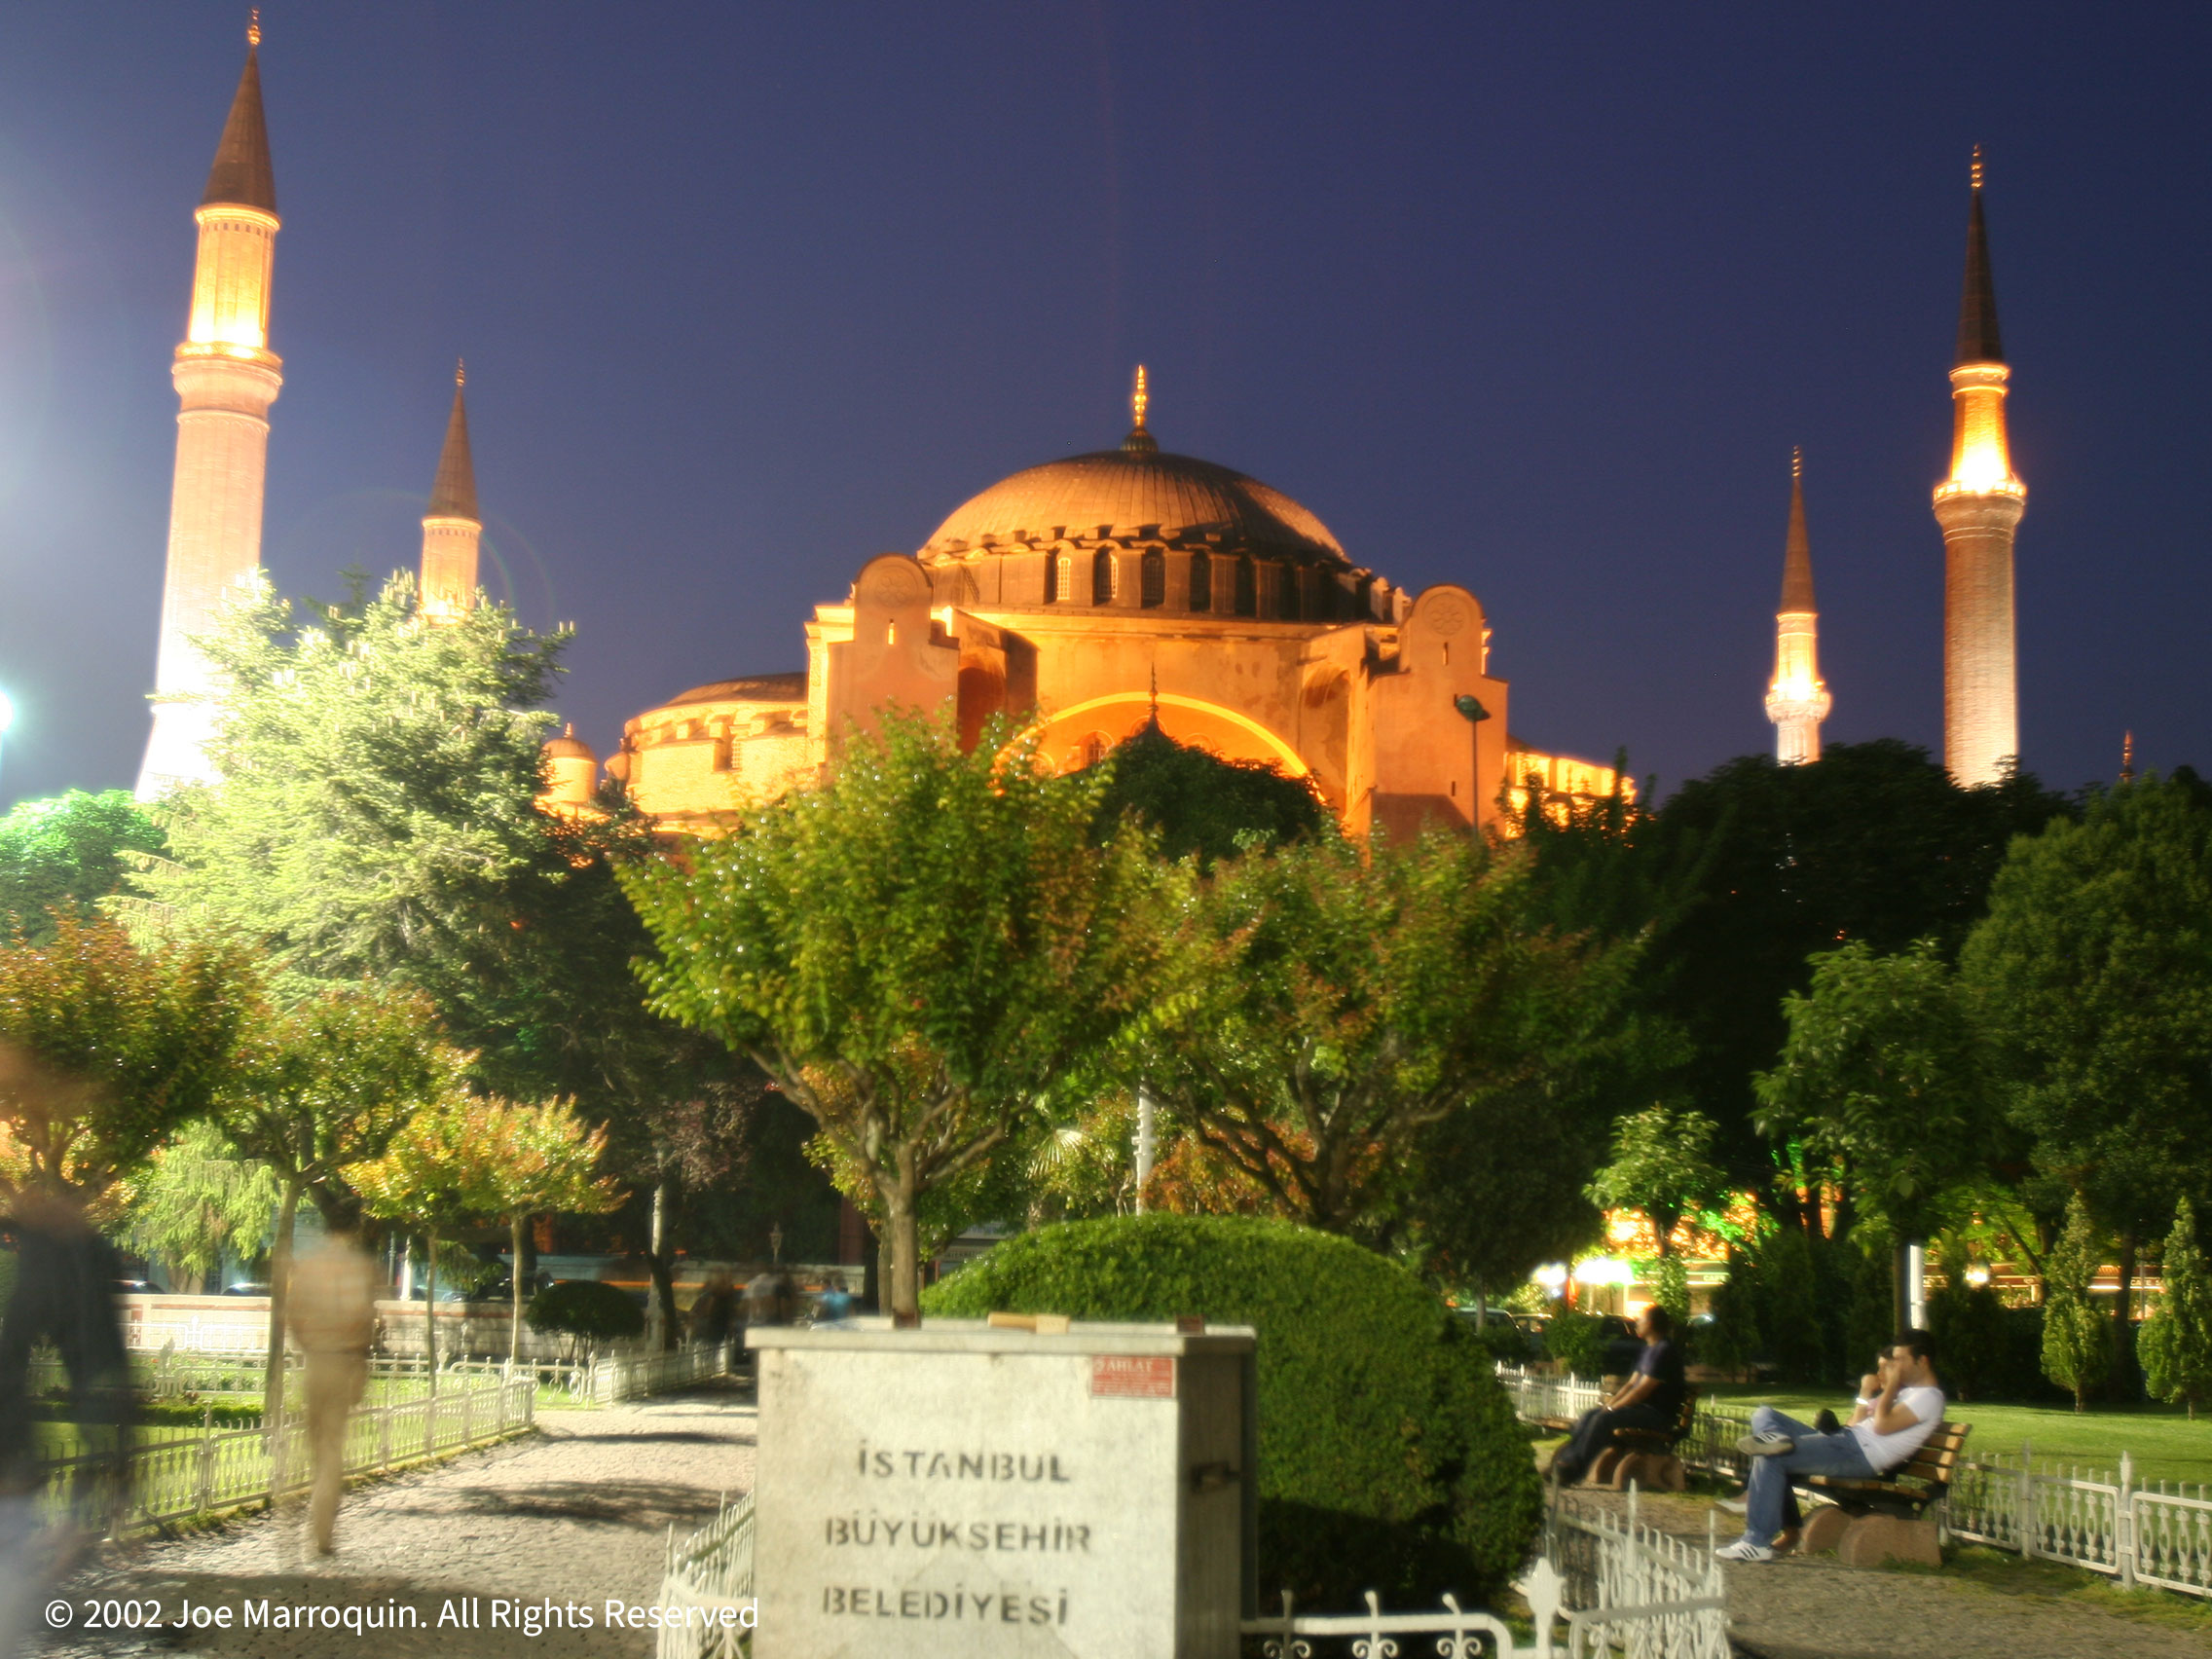 Istanbul, Athens, and Ephesus